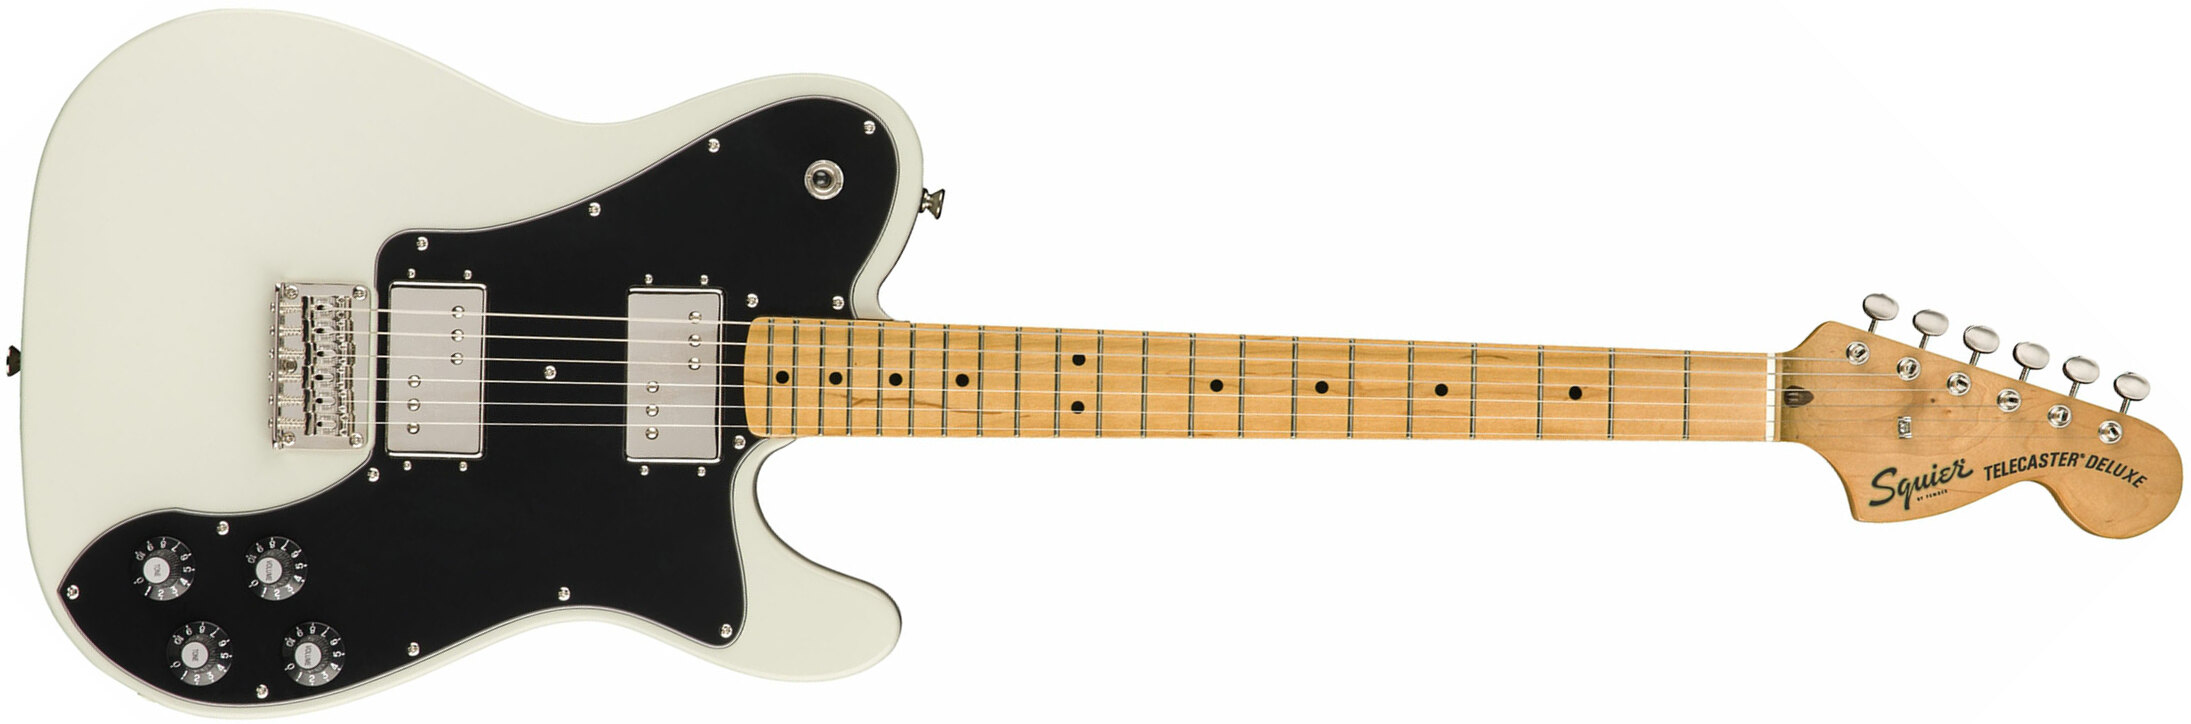 Squier Tele Deluxe Classic Vibe 70s 2019 Hh Mn - Olympic White - Televorm elektrische gitaar - Main picture